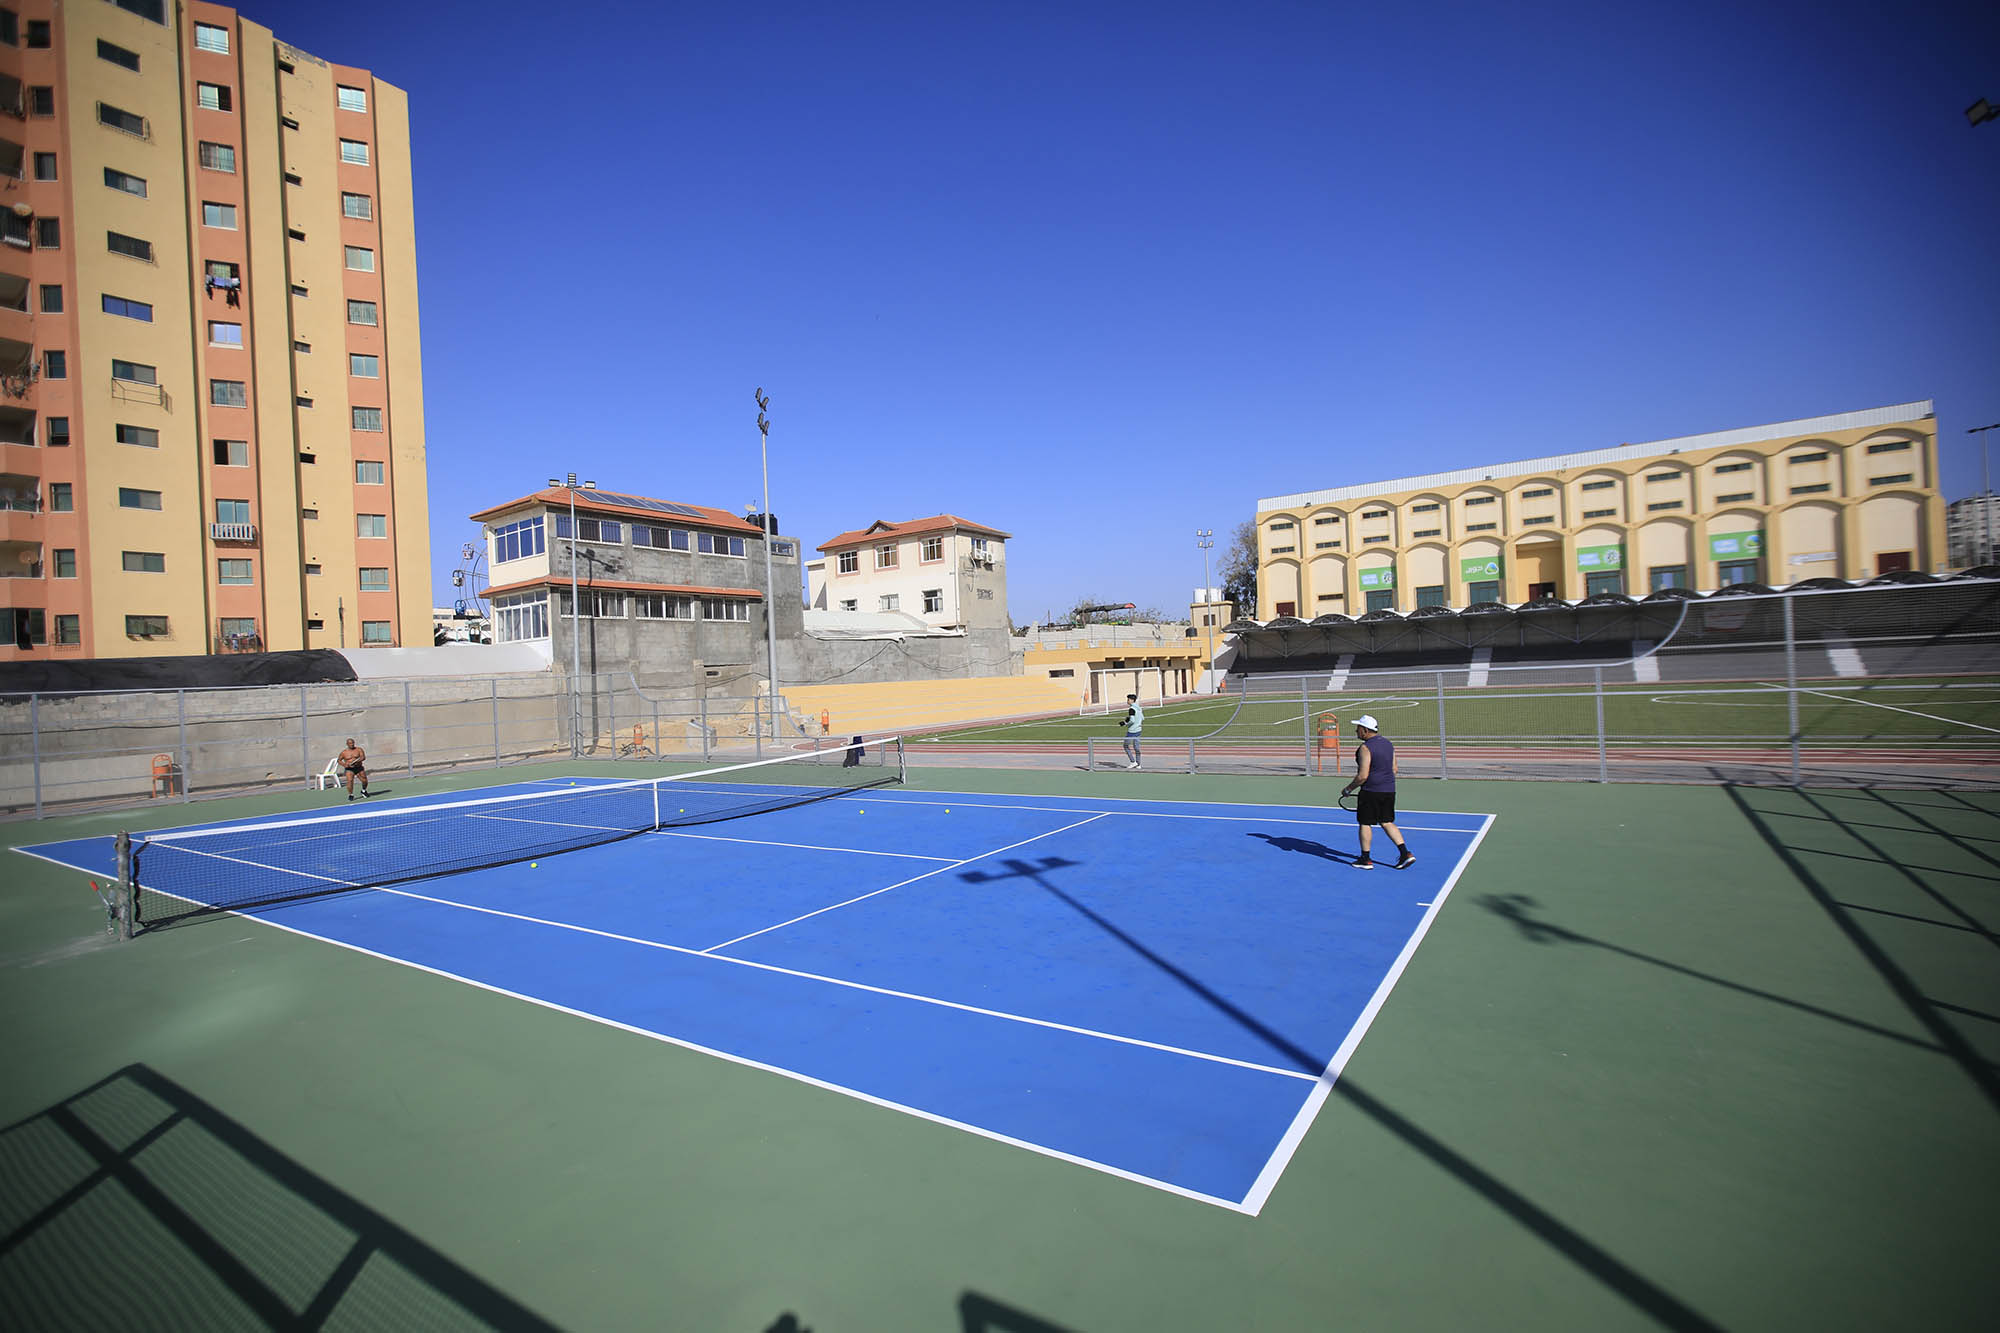 Gaza sports club tennis court.